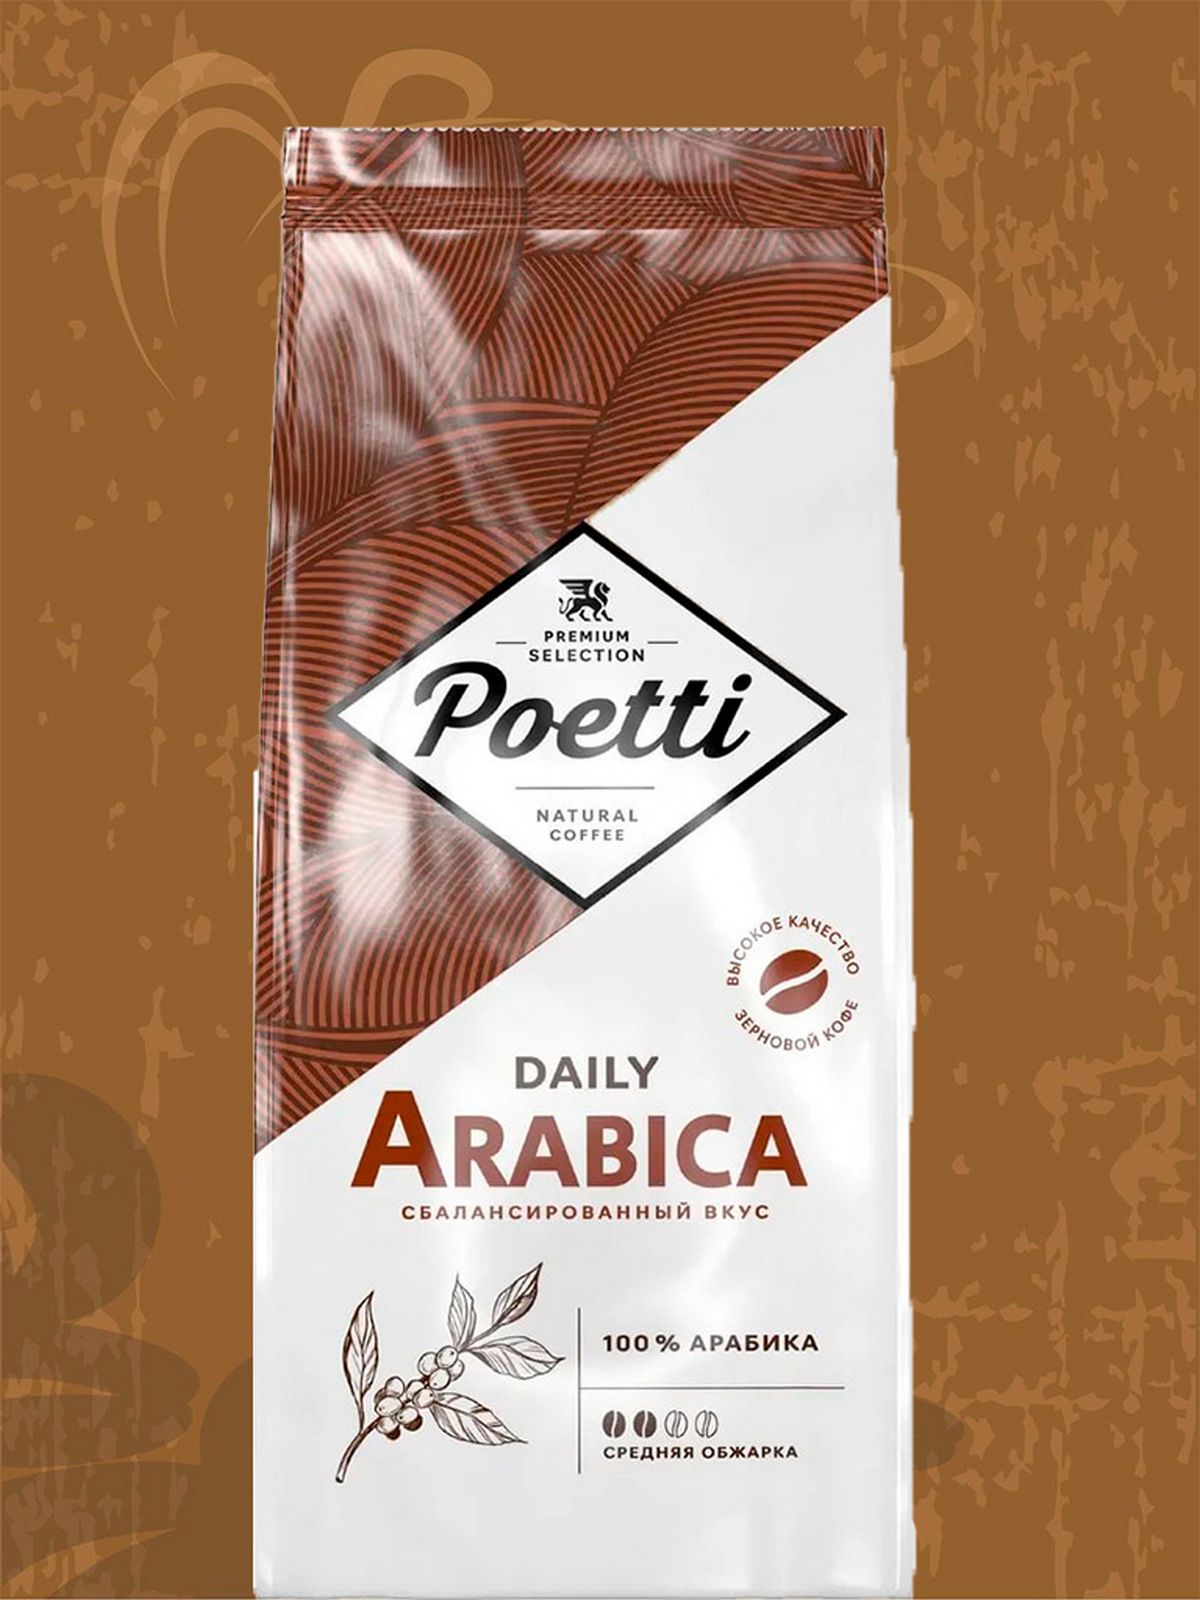 Кофе daily arabica. Poetti Daily Arabica цены. Poetti clssico.